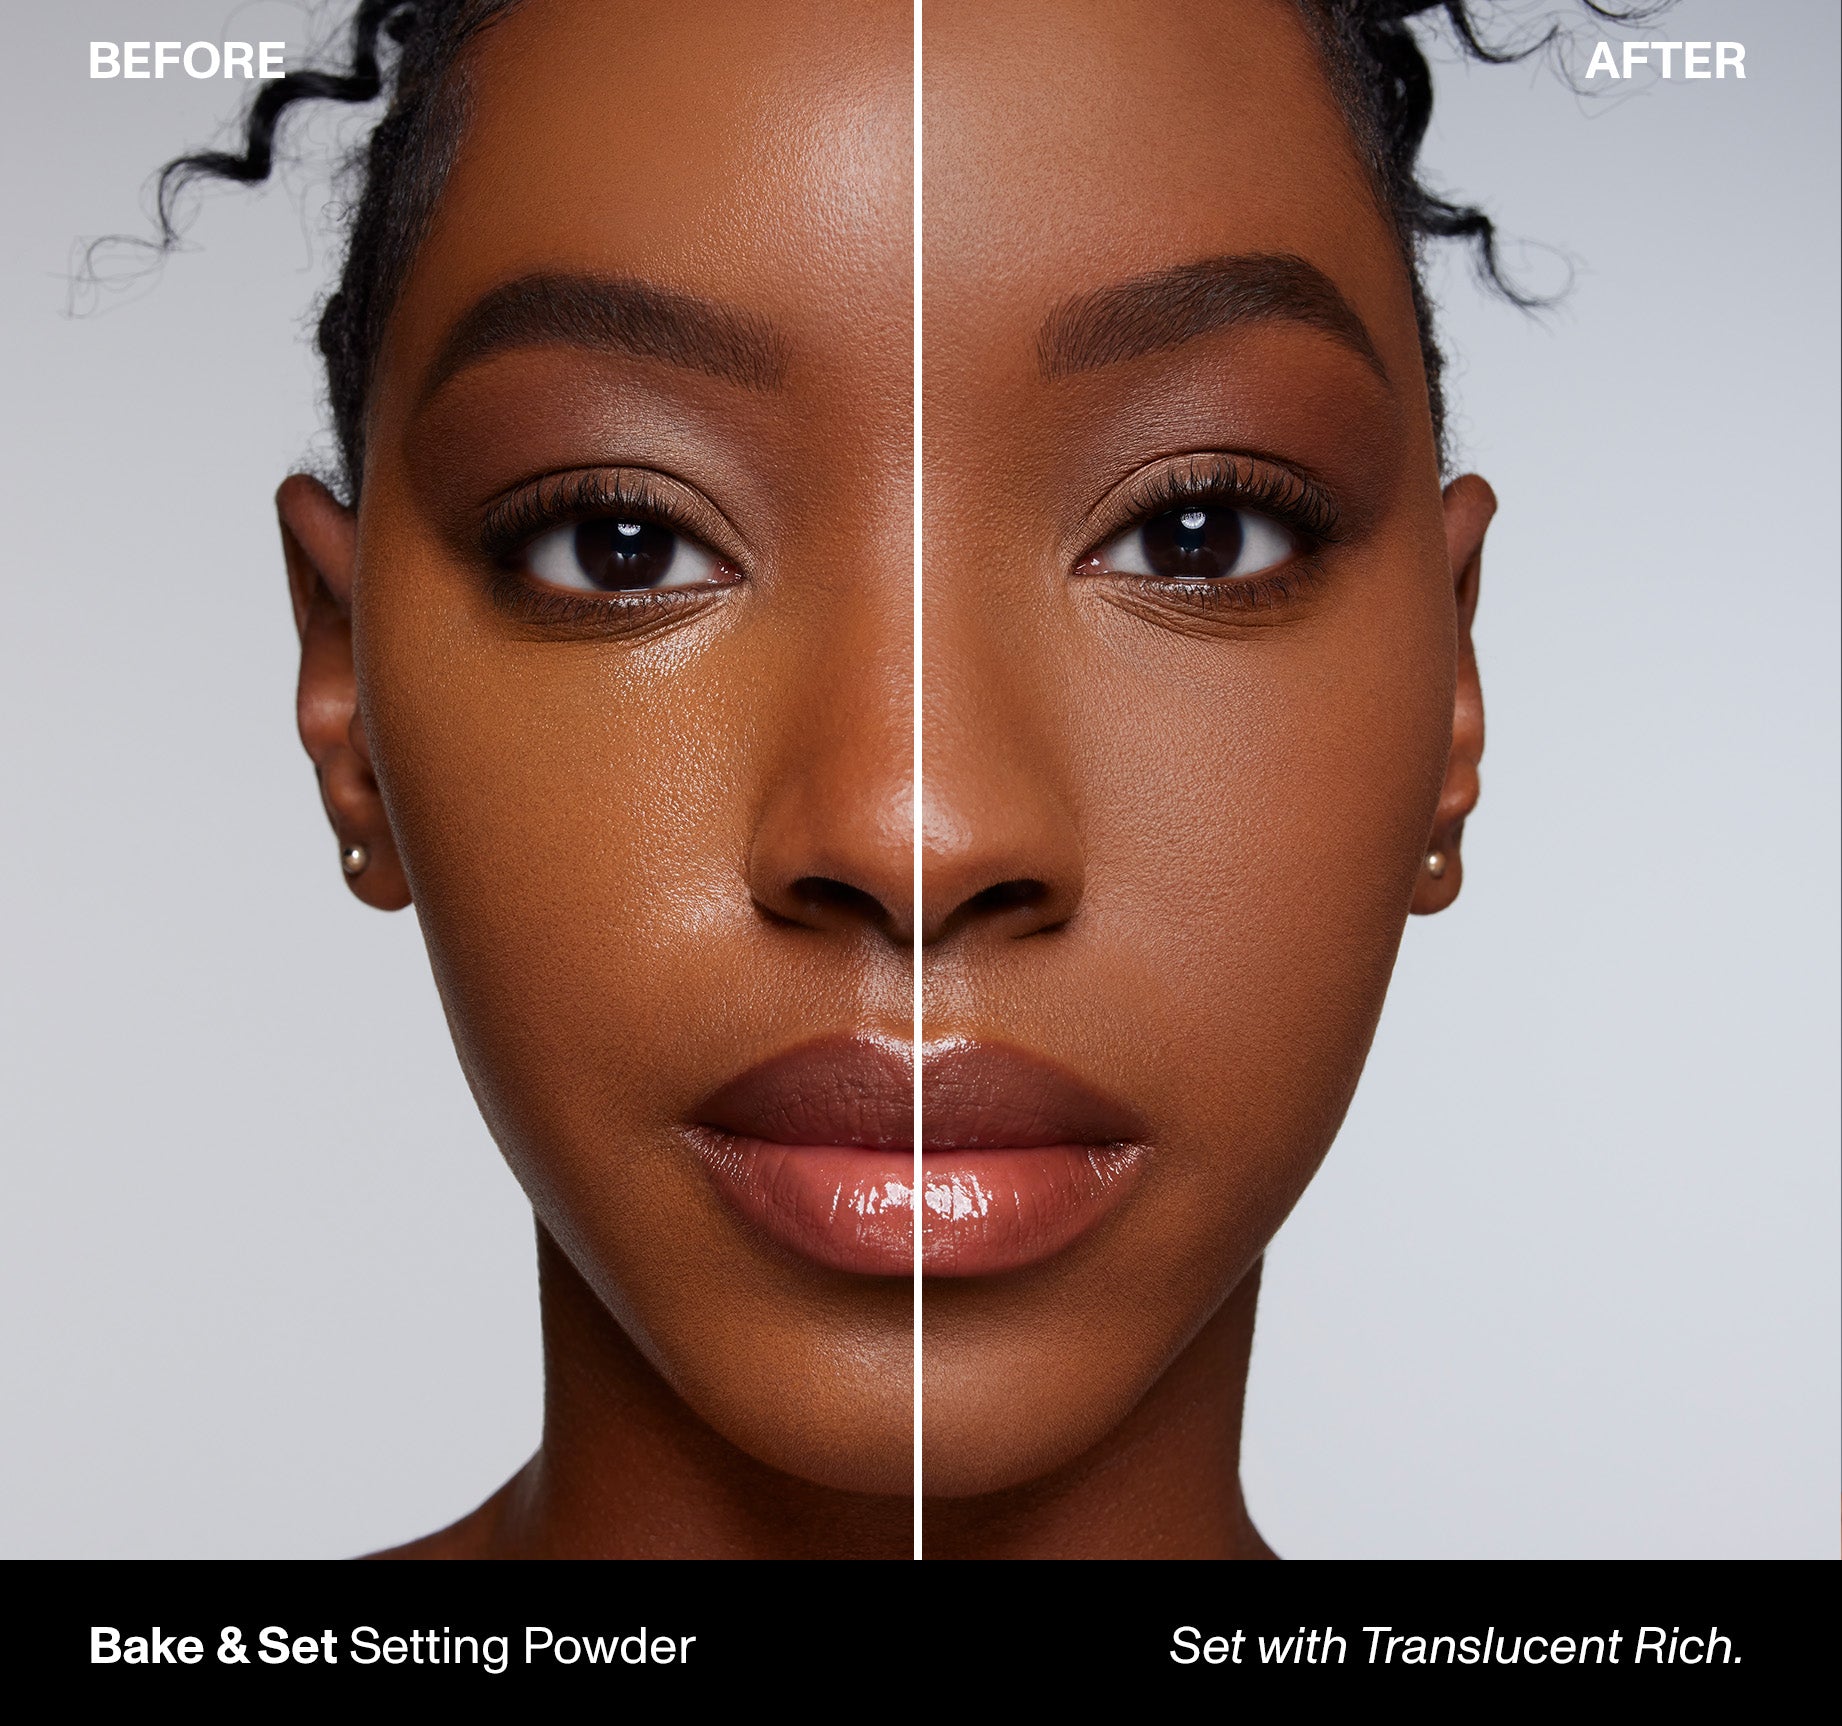 Bake & Set Soft Focus Setting Powder - Translucent Rich - Image 3